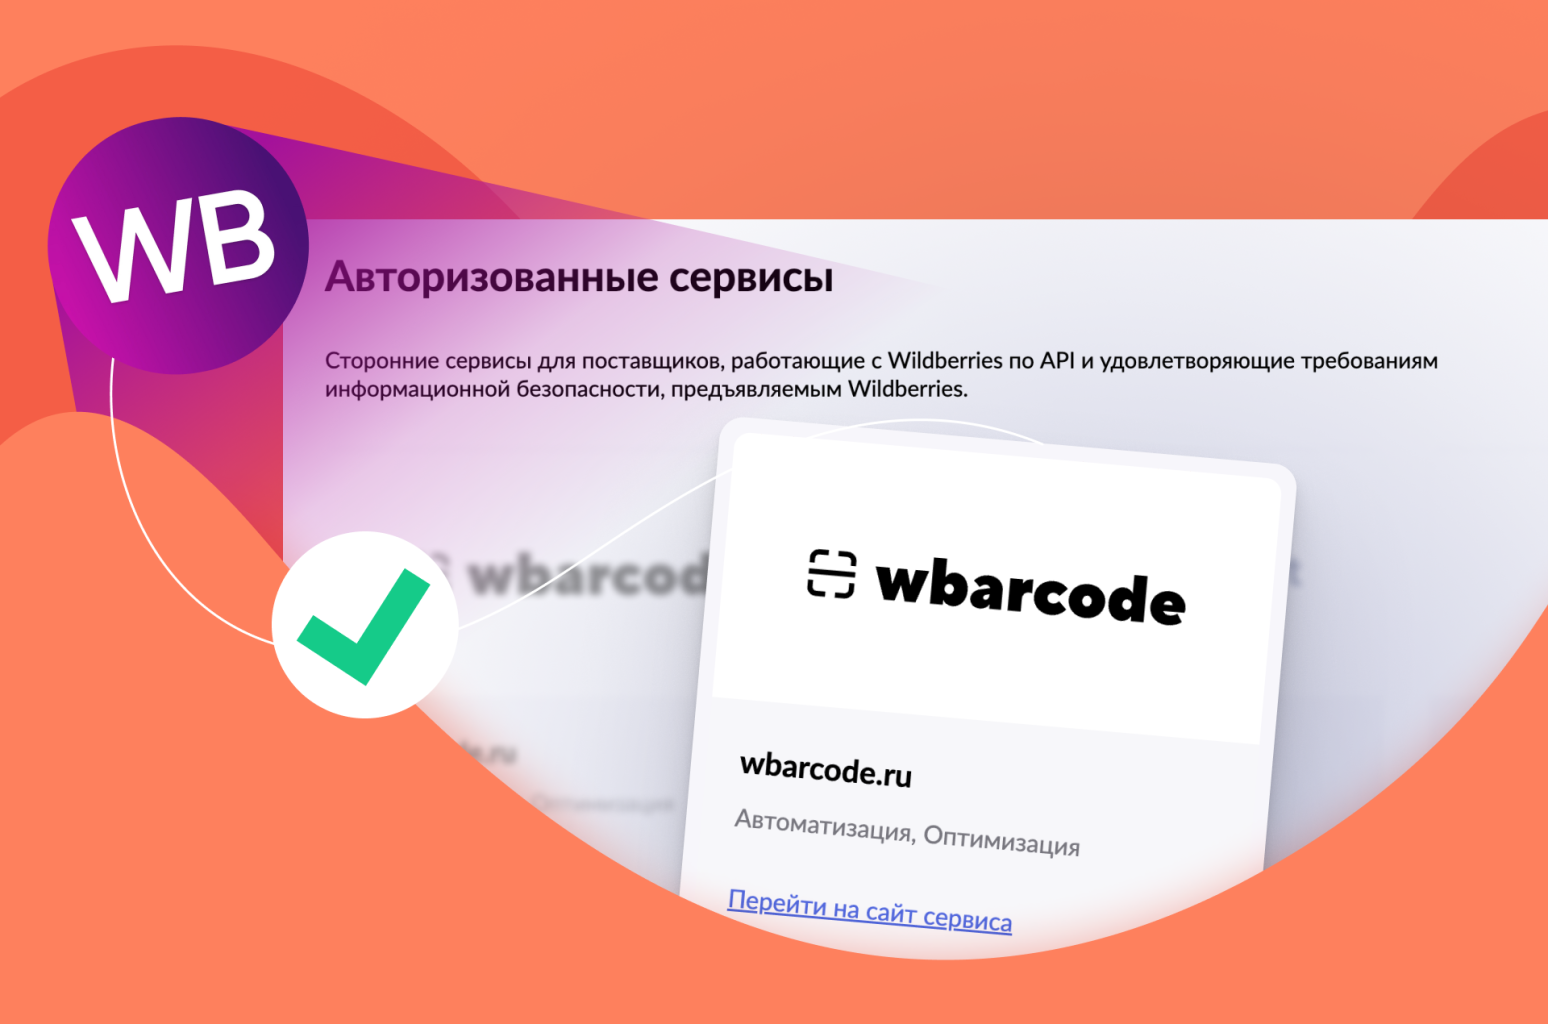 Wbarcode.ru авторизованный сервис Wildberries